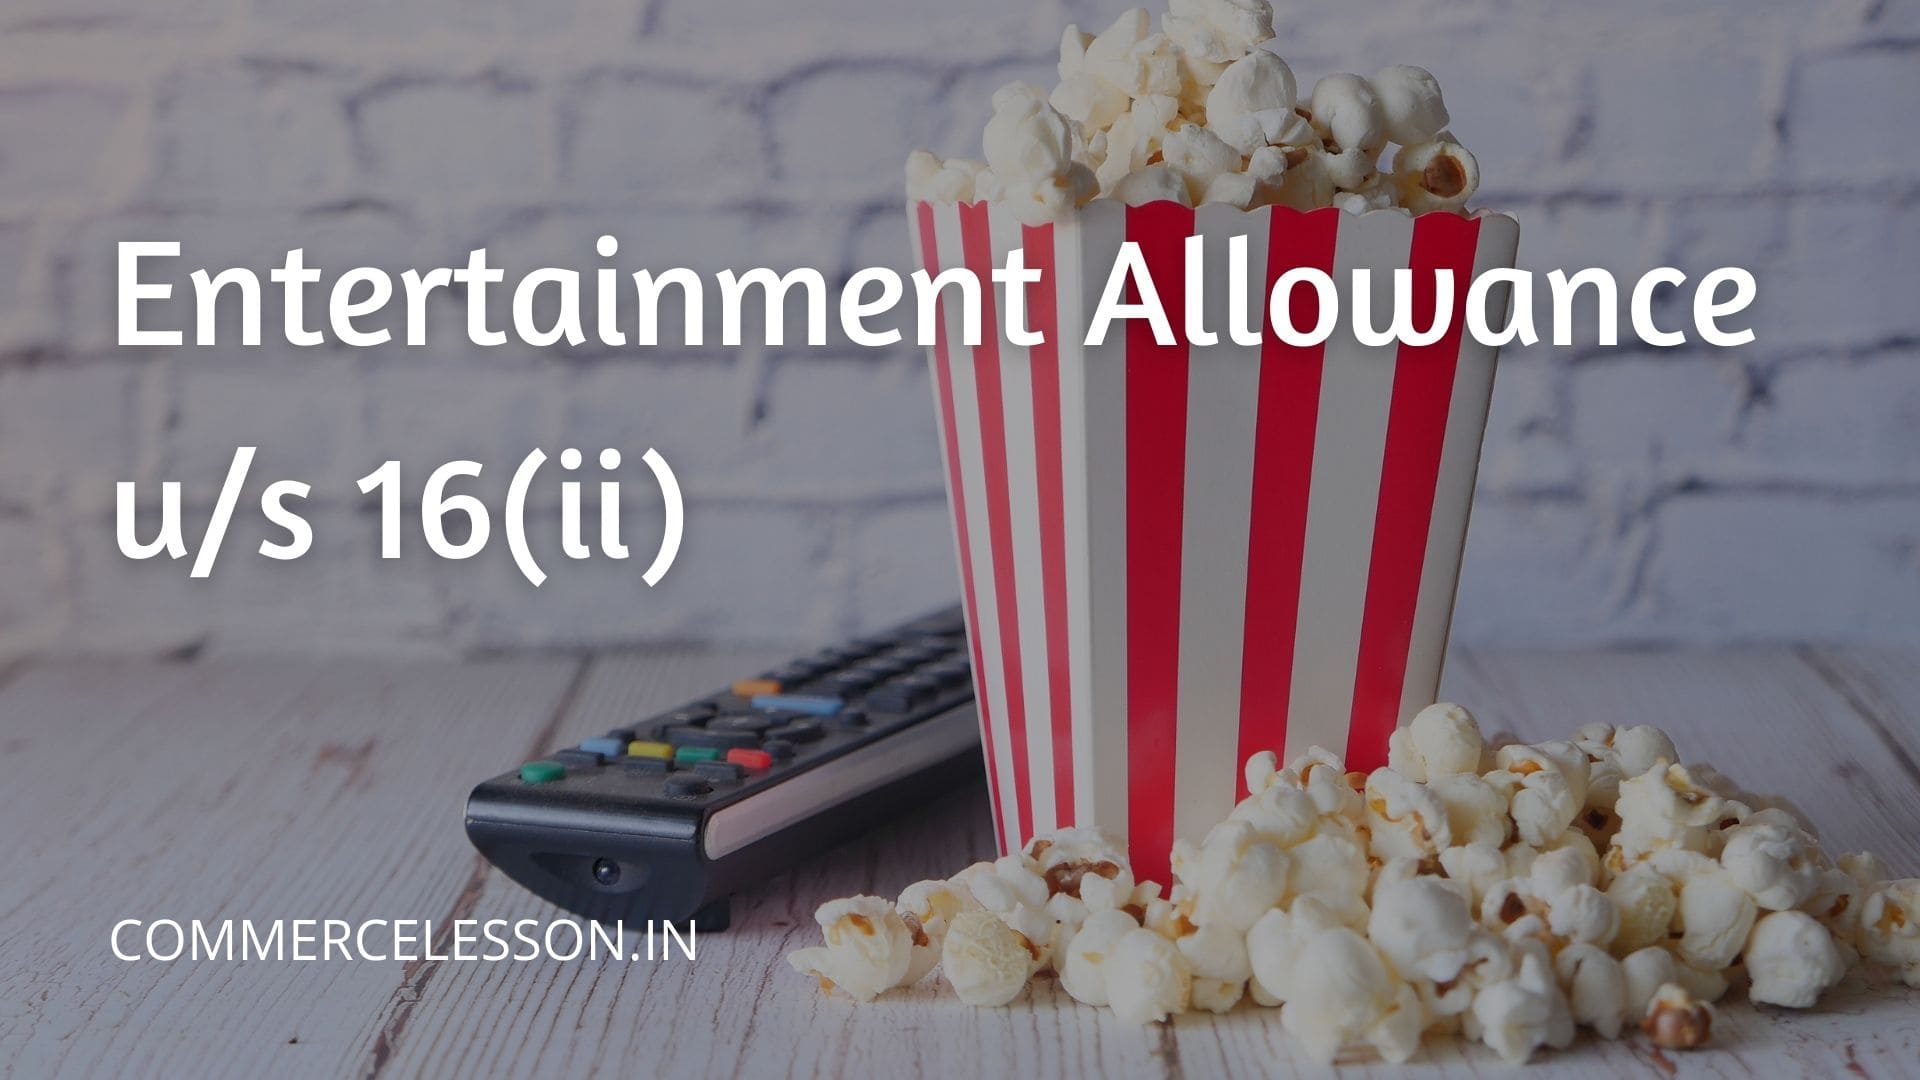 Entertainment allowance u/s 16(ii)